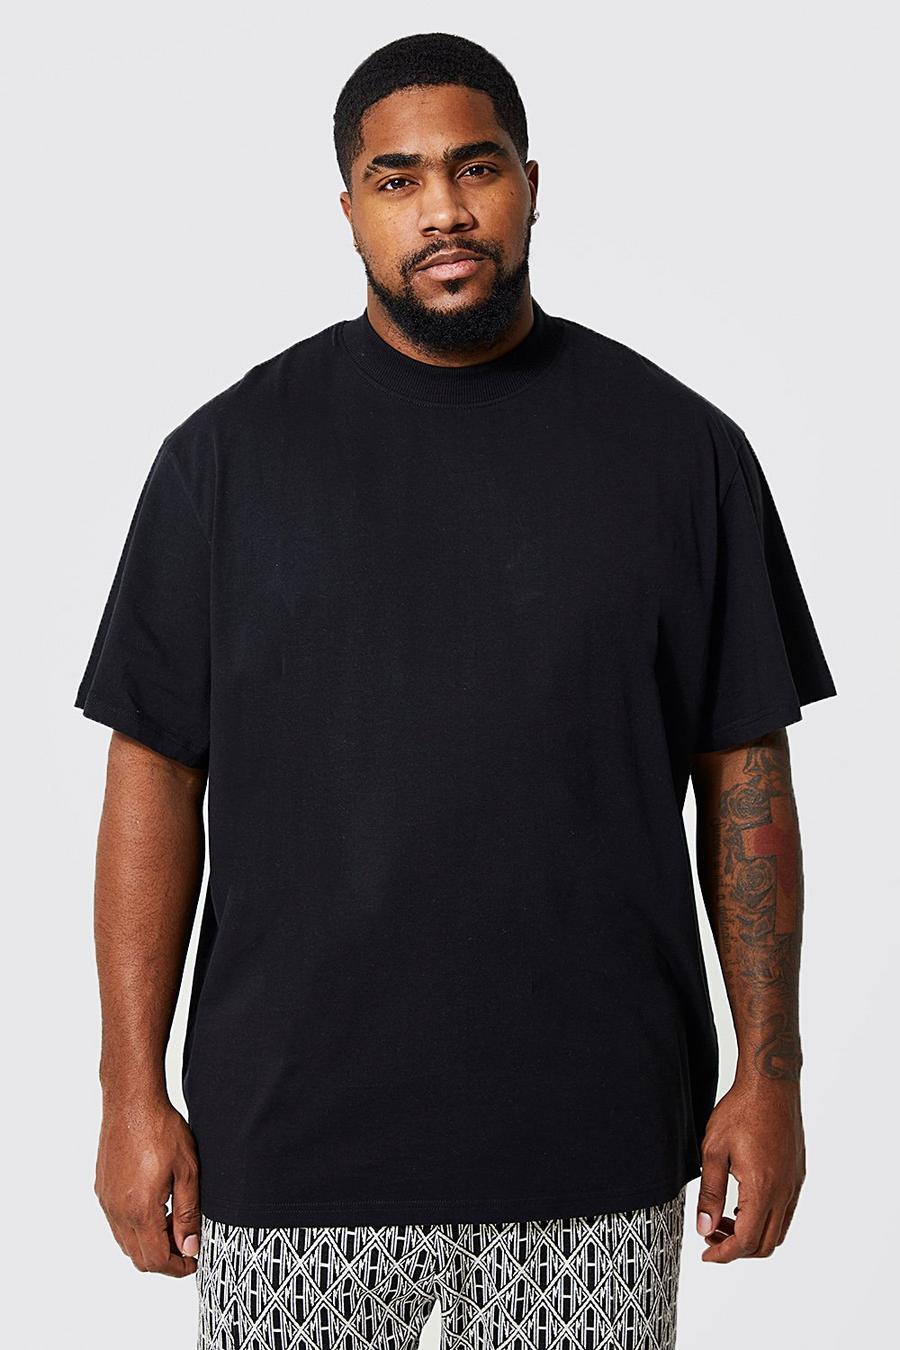 T-shirt Plus Size comoda in cotone REEL con girocollo esteso, Black negro